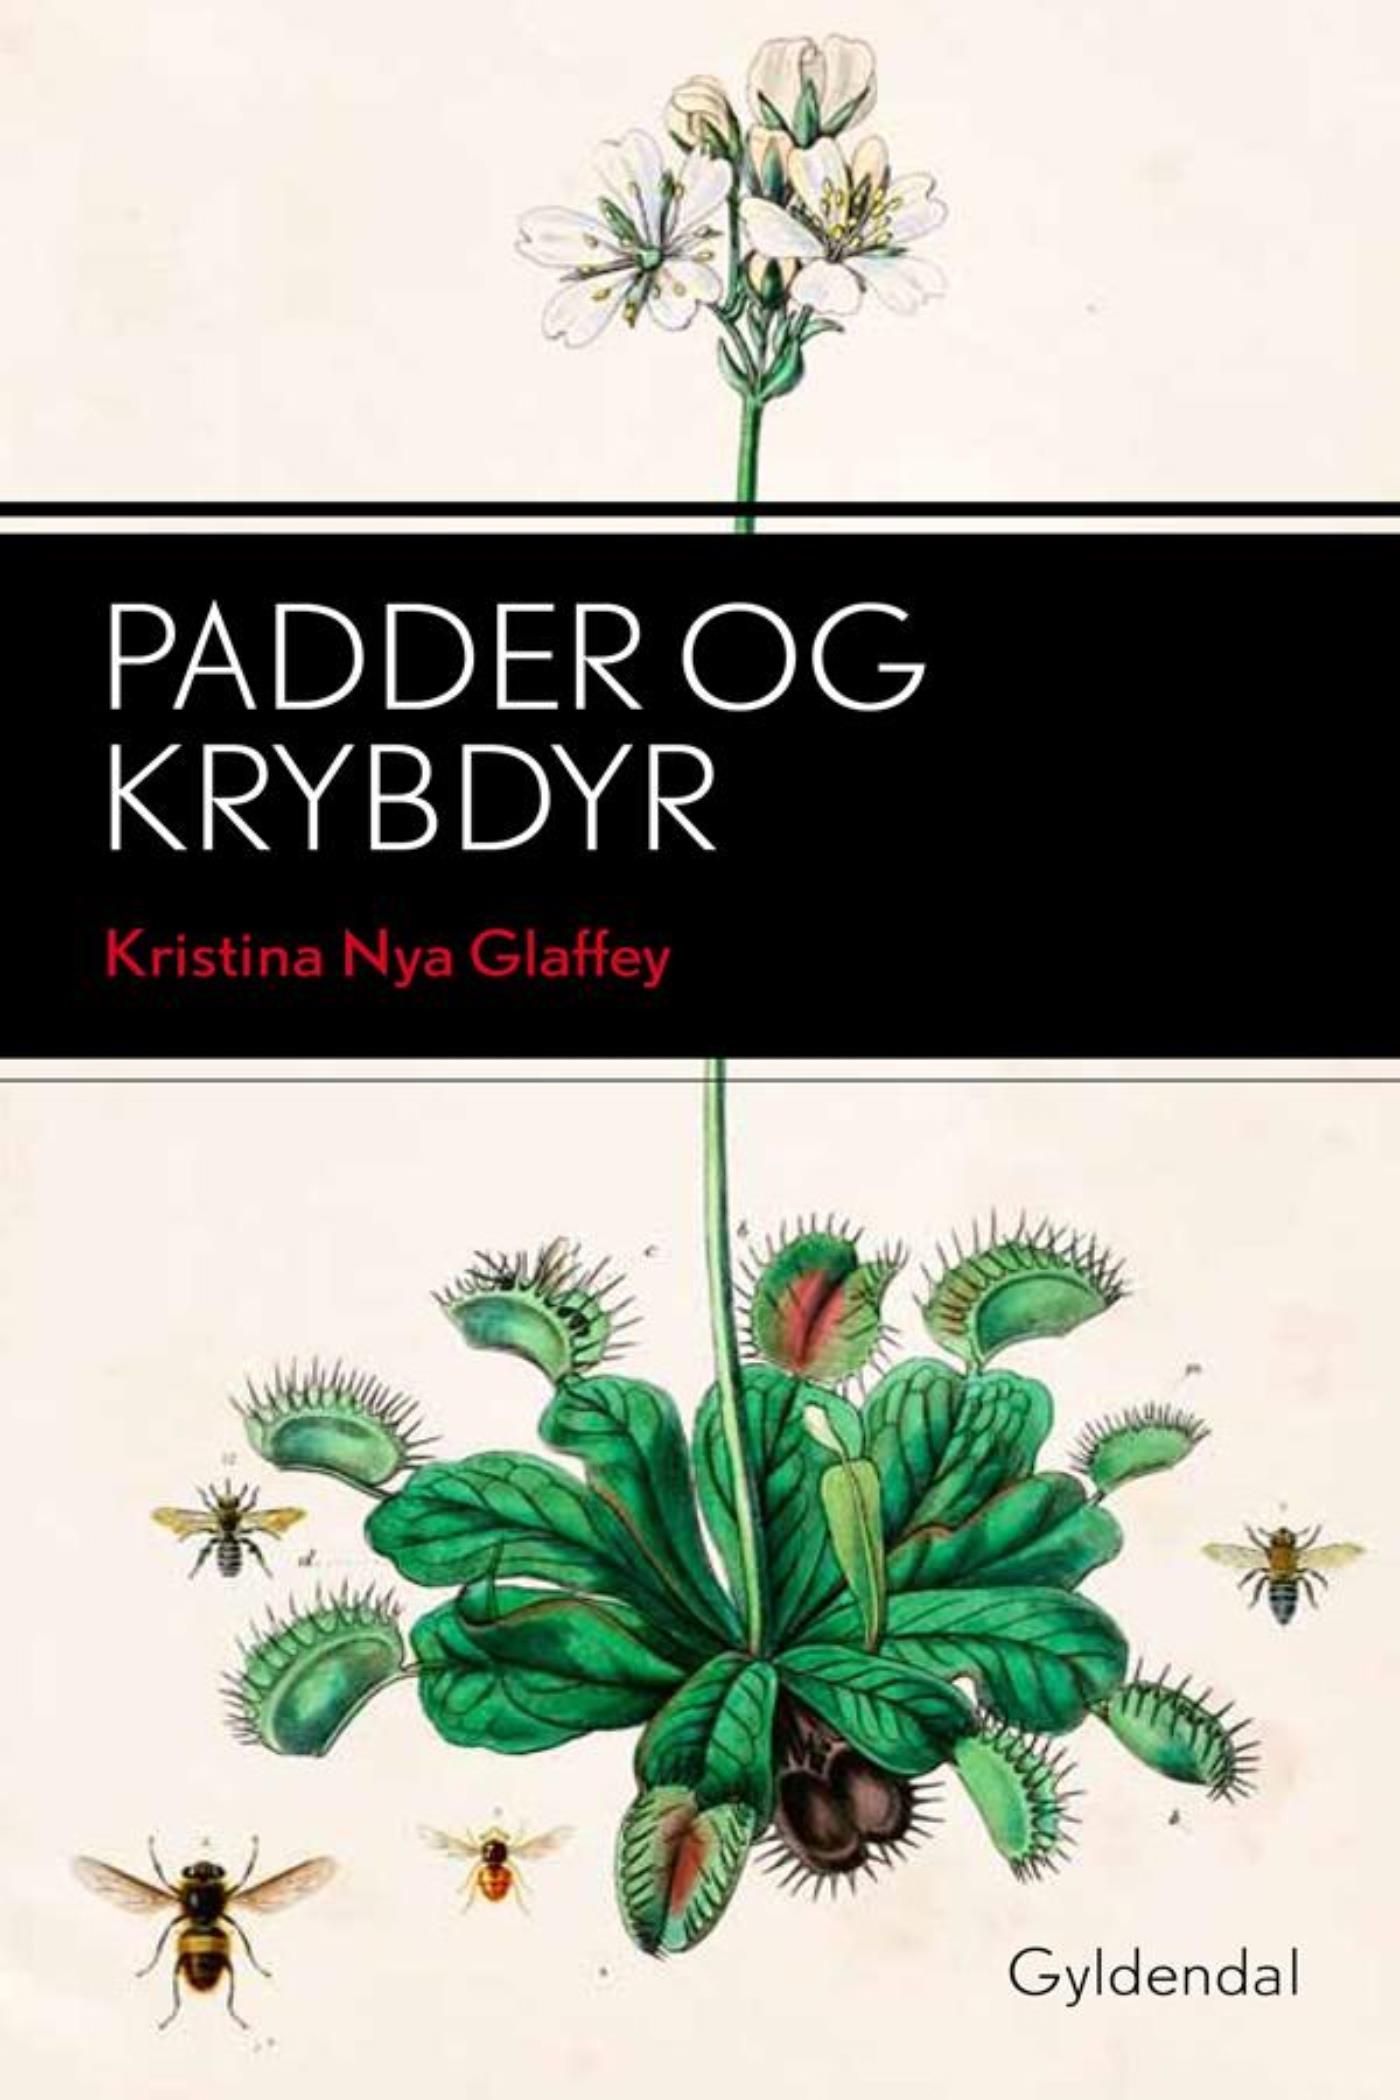 Padder og krybdyr, eBook by Kristina Nya Glaffey